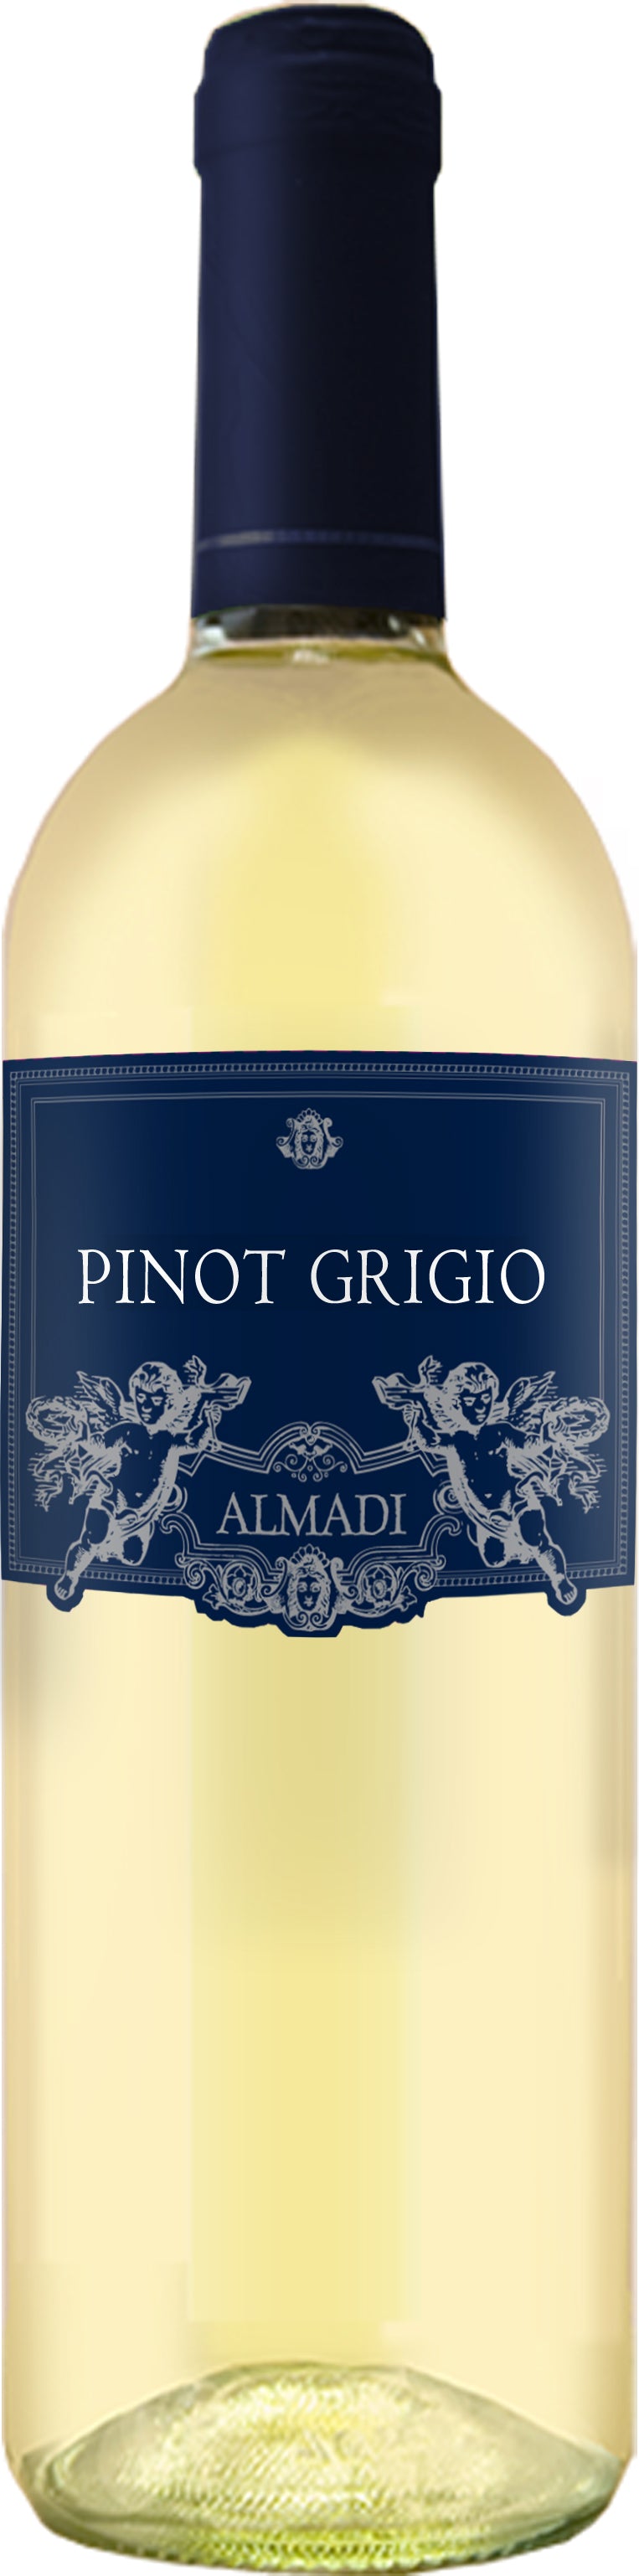 Almadi Pinot Grigio 2017